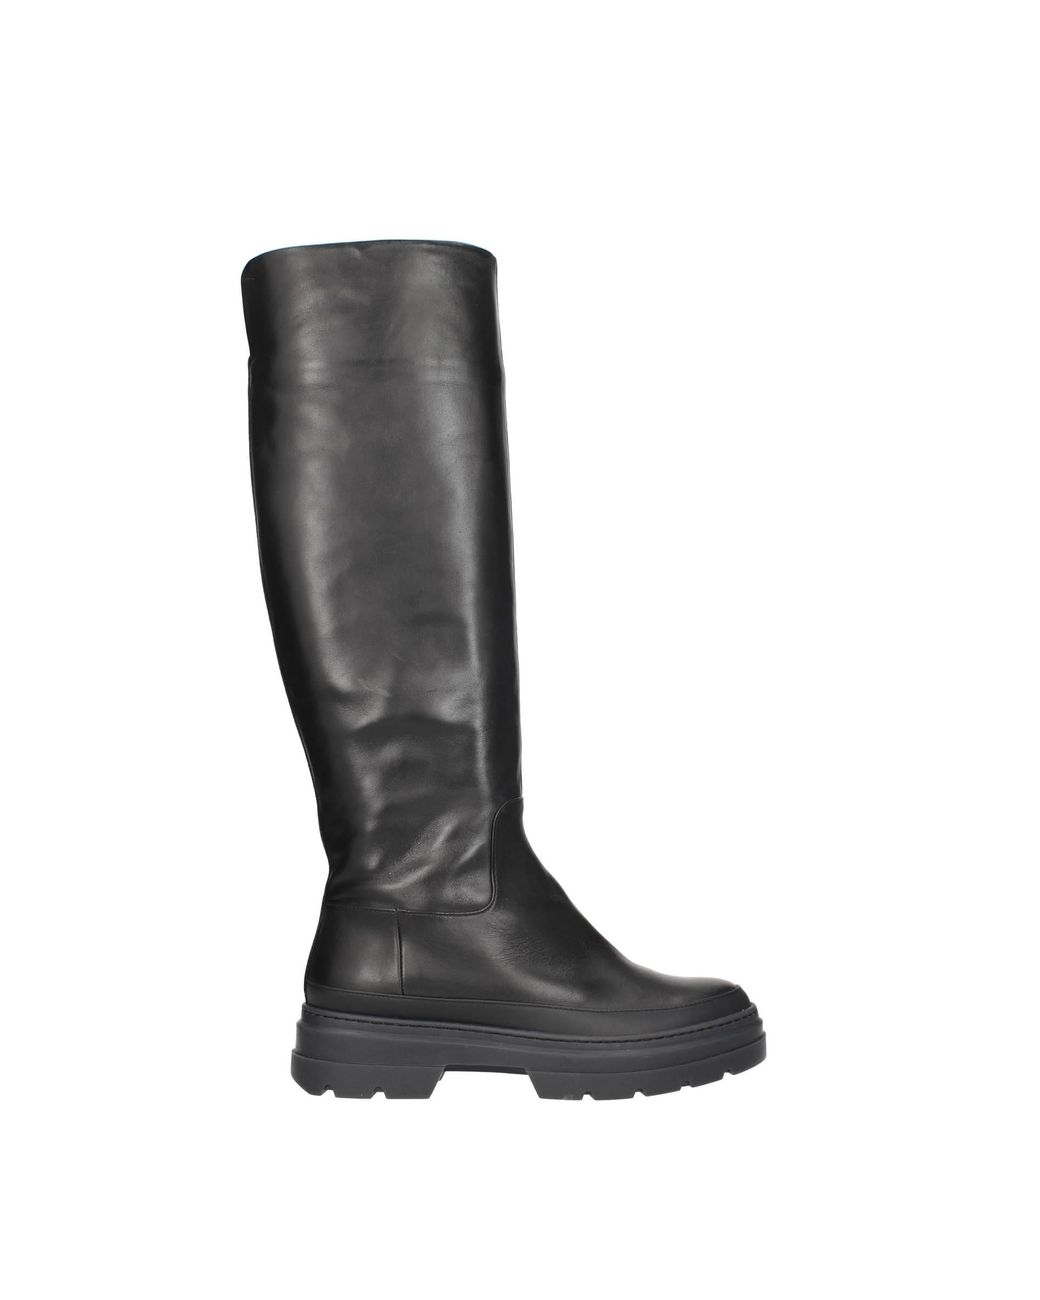 Max Mara Boots Beryl Leather in Black | Lyst